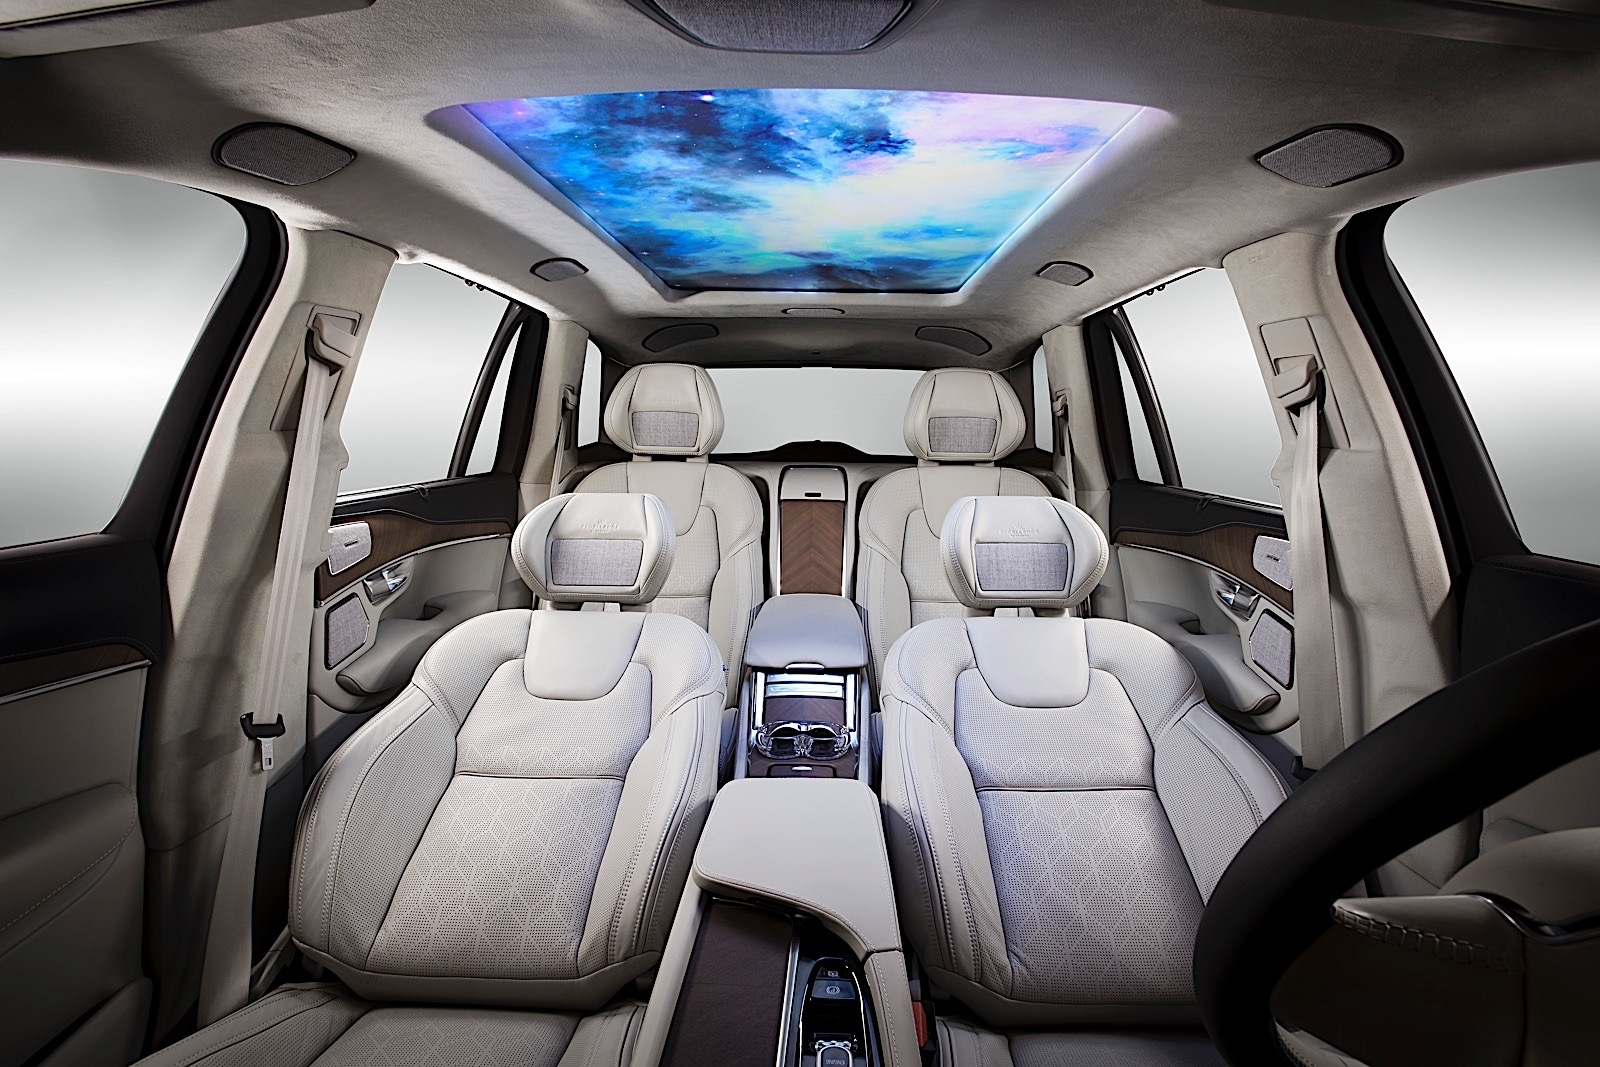 Harman is designing smart interiors for tomorrow's autonomous cars | DeviceDaily.com